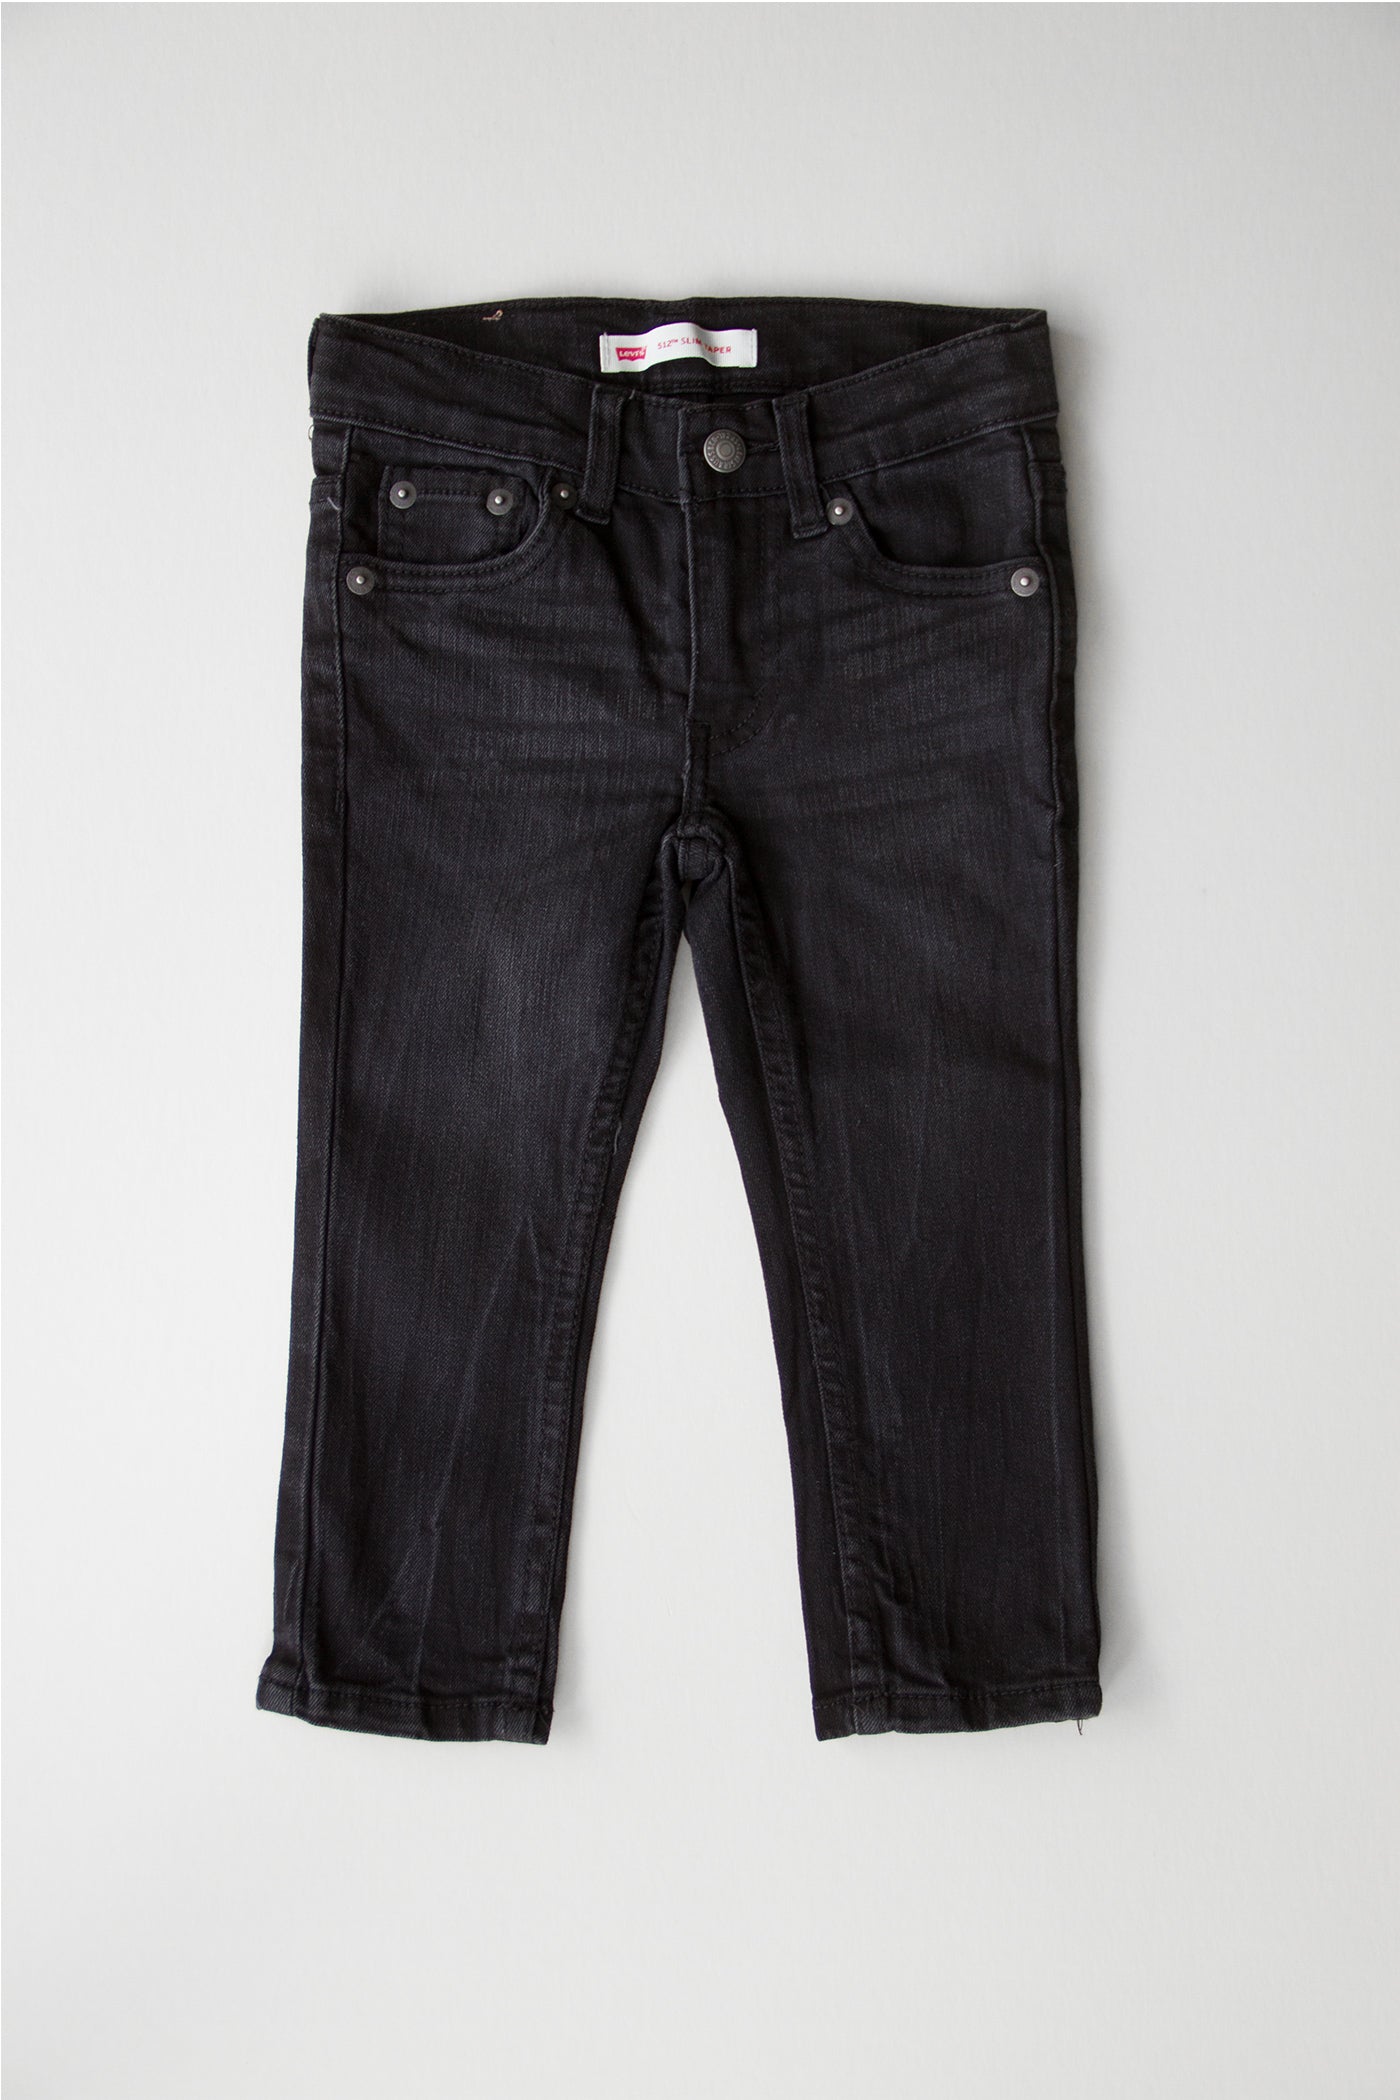 512 Slim Taper Kids Jeans by Levi's